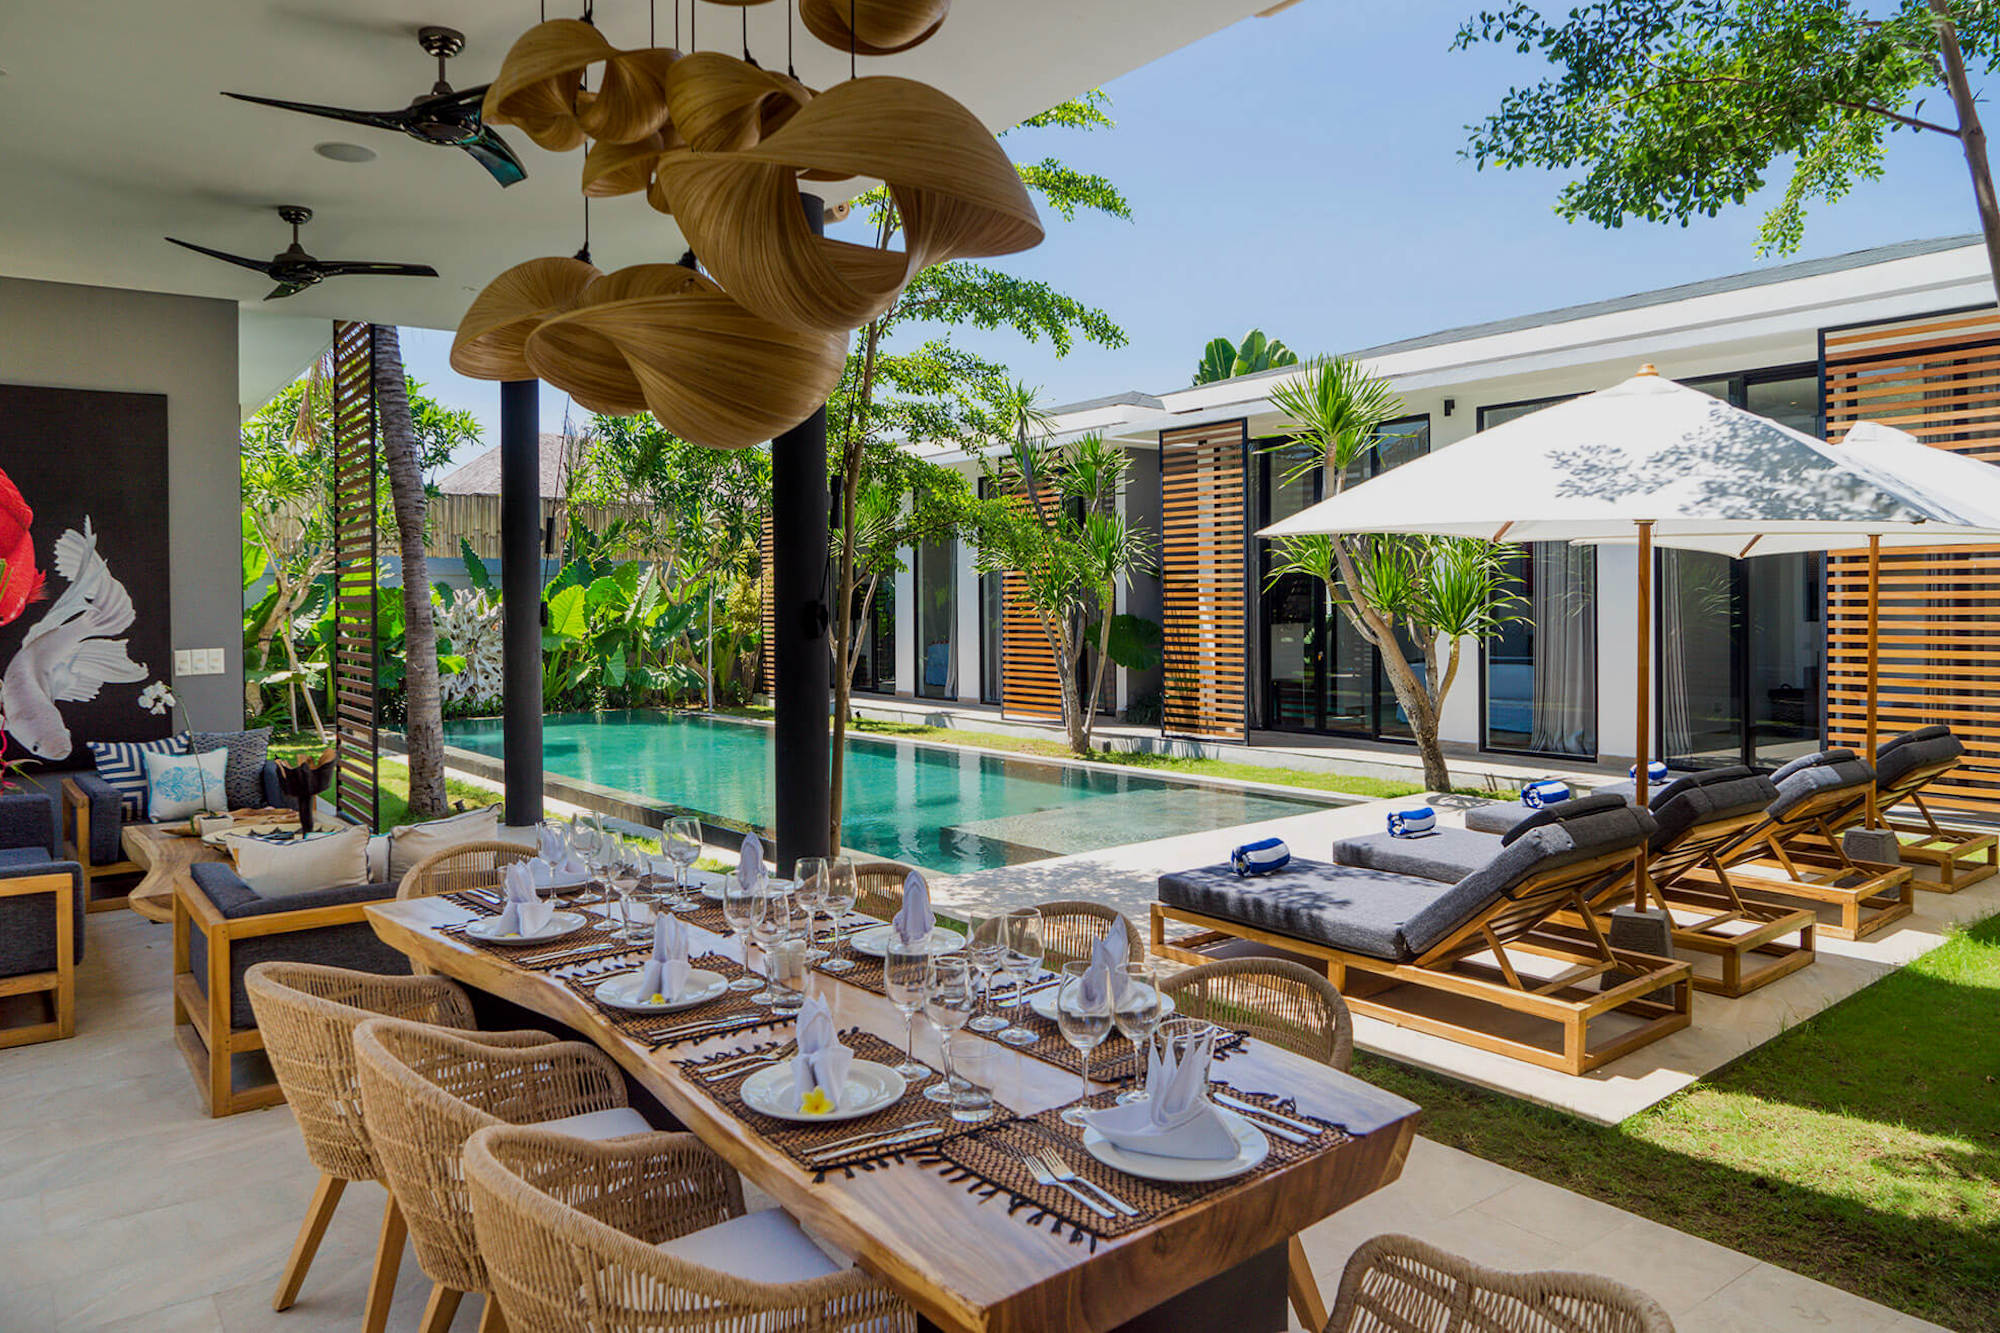 Living the Bali Life at Villa Vida